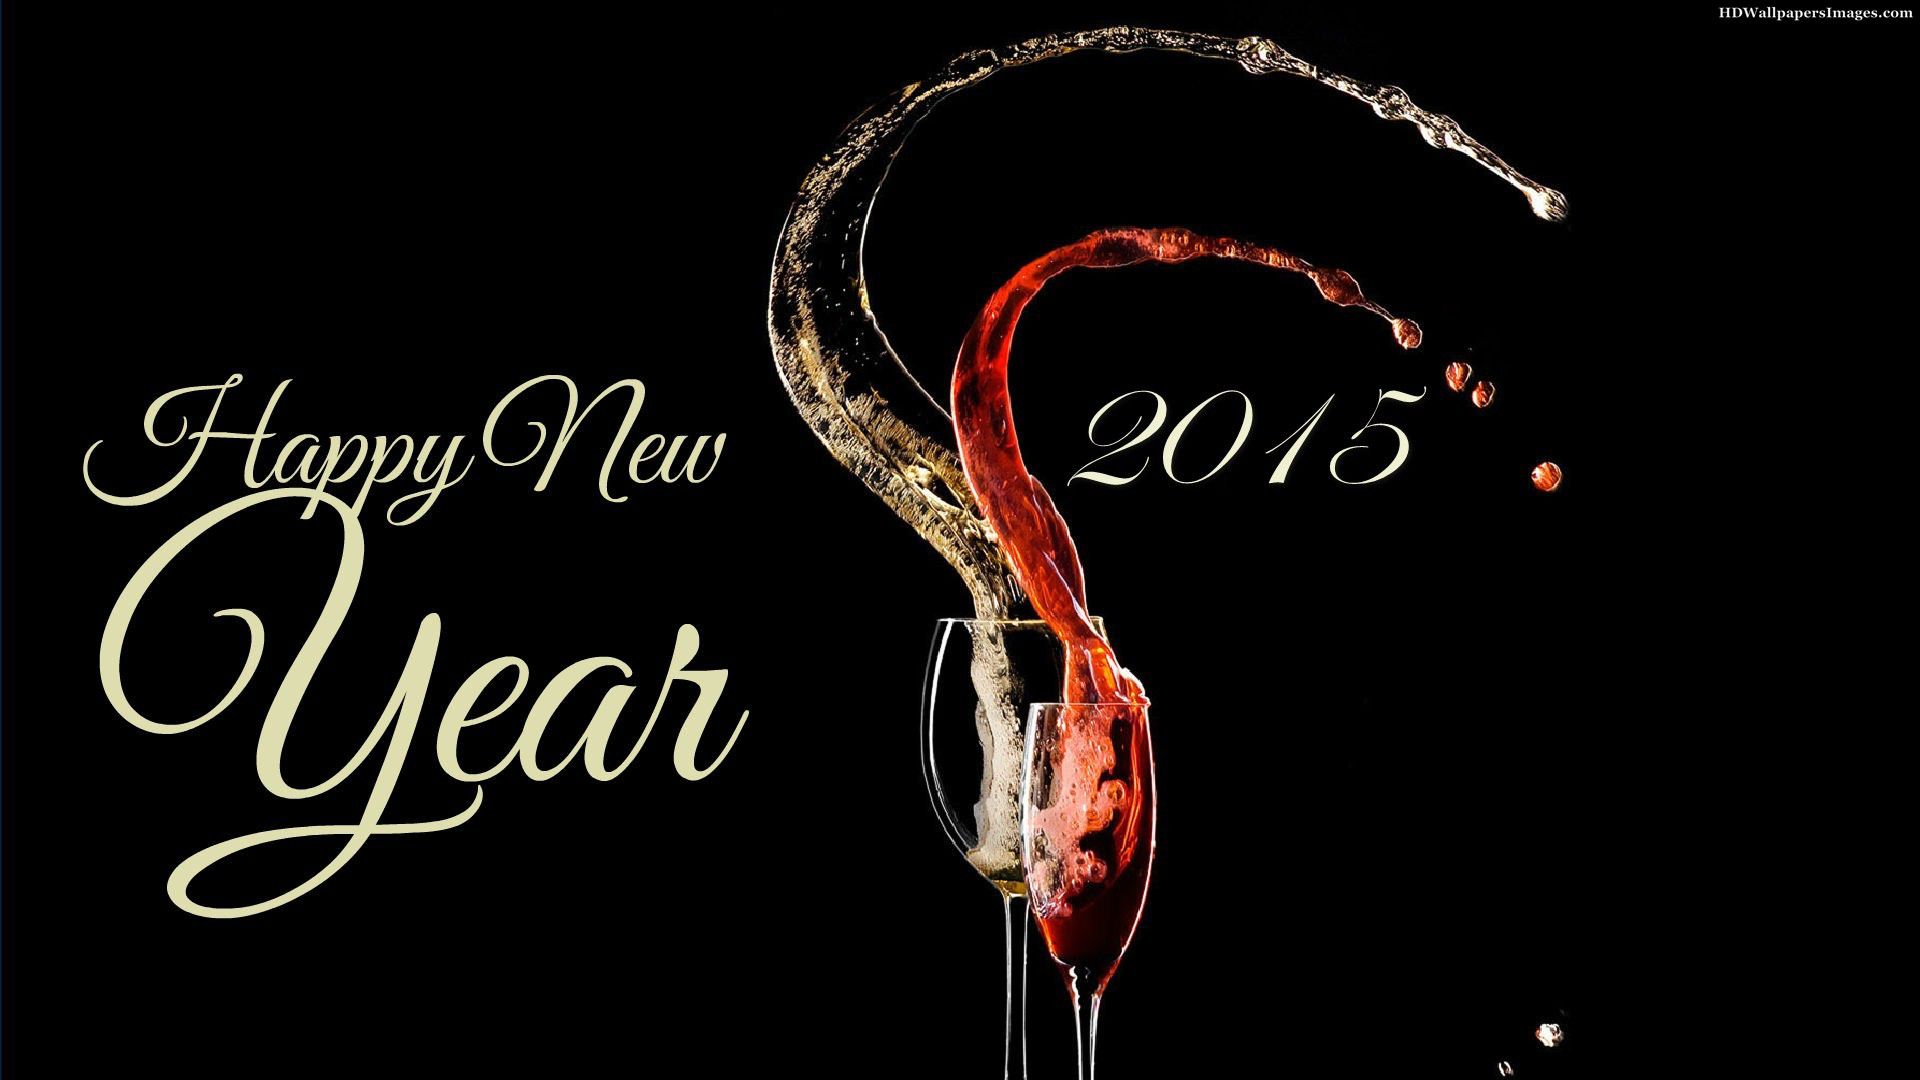 Celebrating-Happy-New-Year-2015-Images